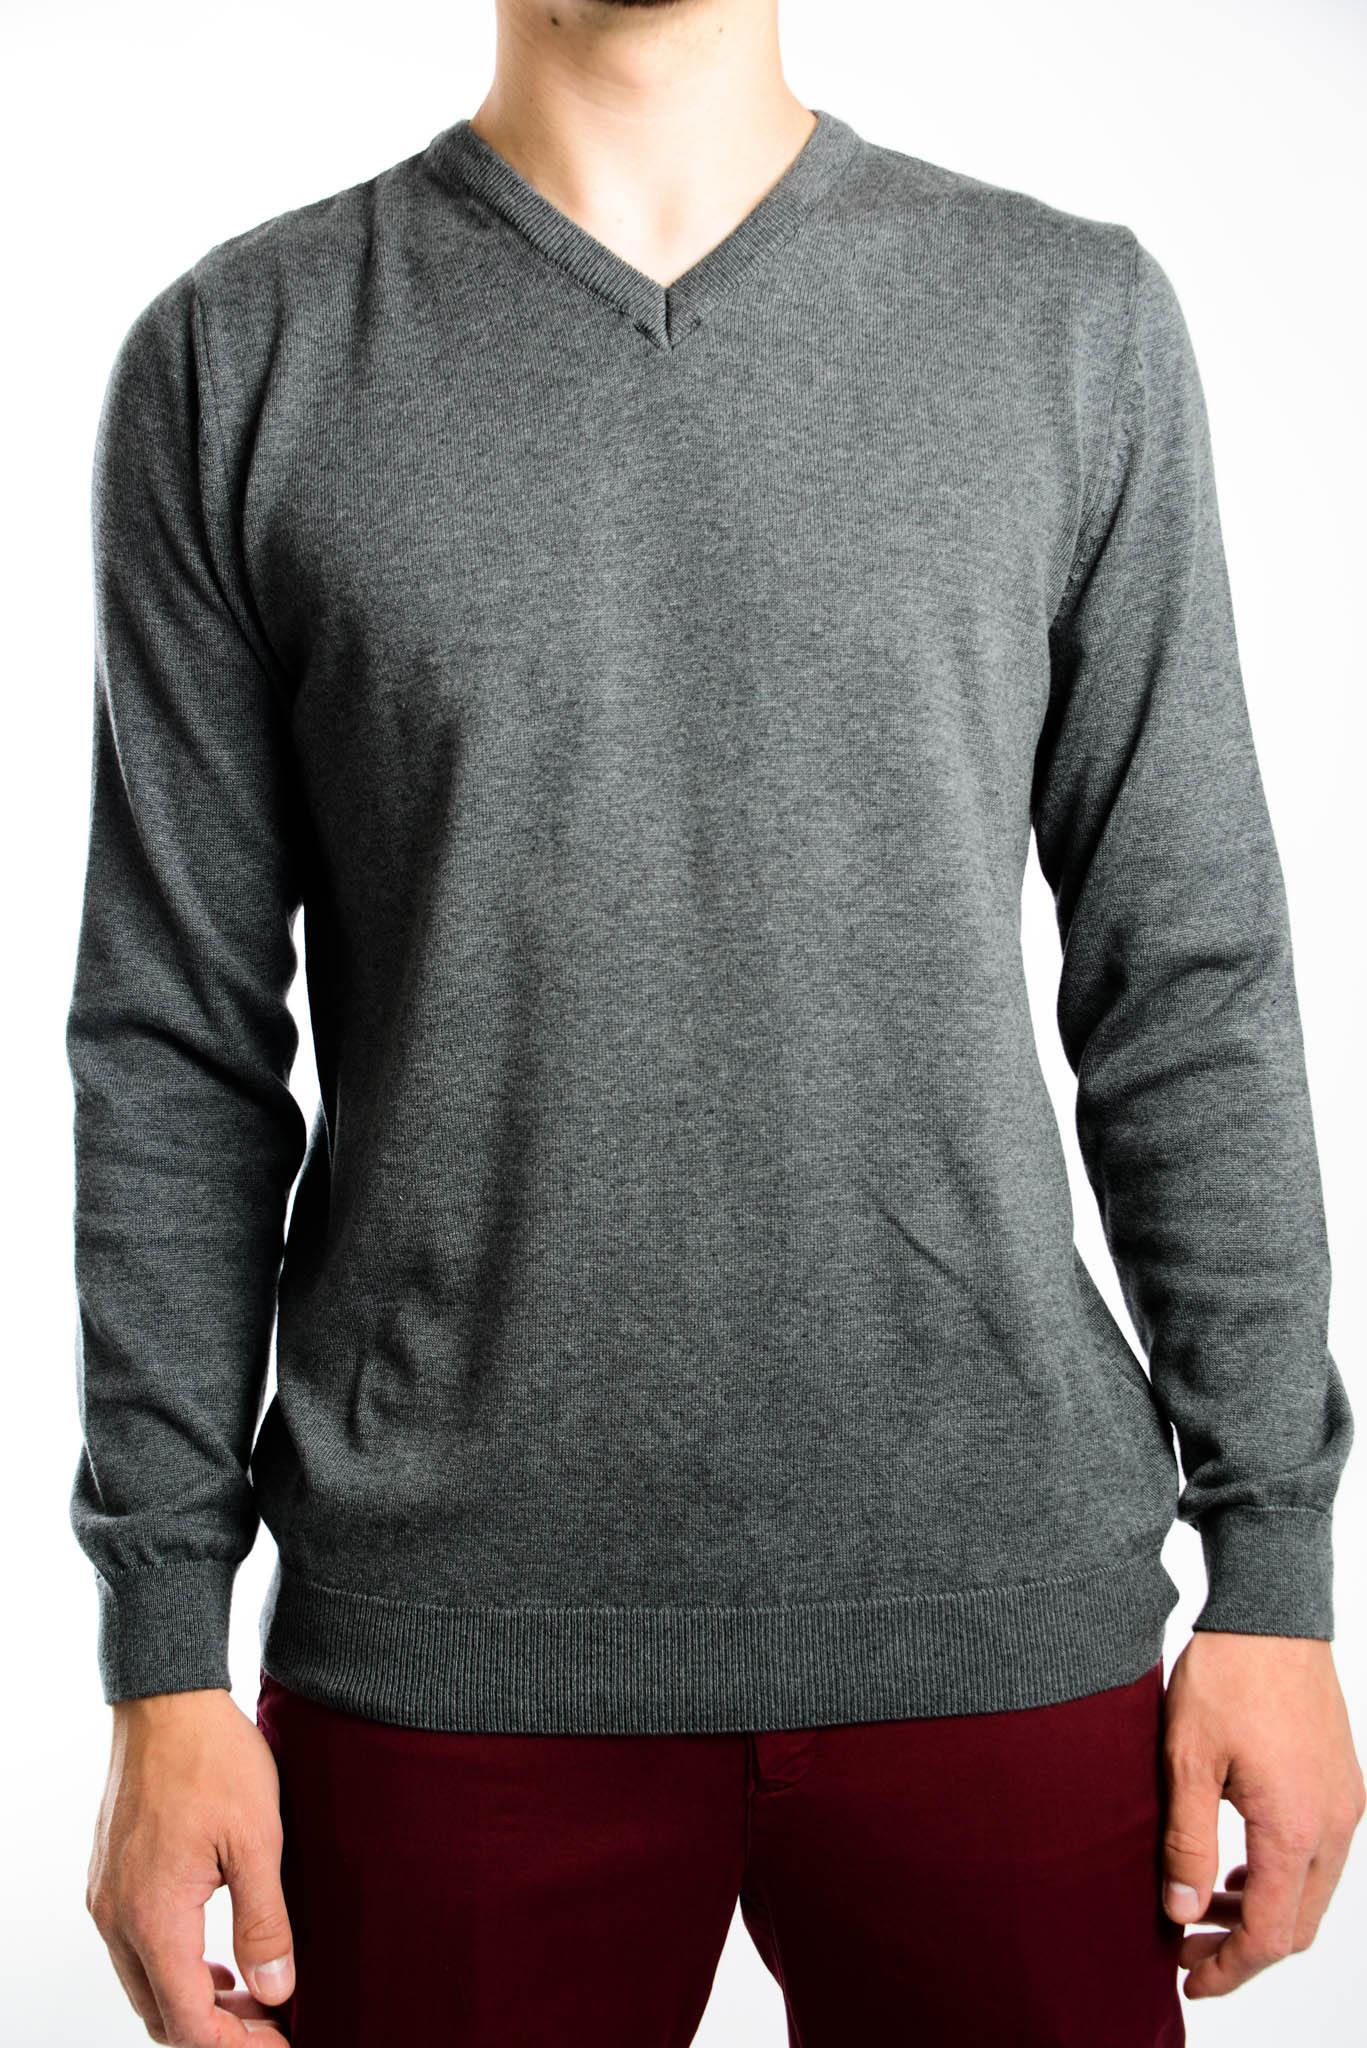 Cambridge V-Neck Euro Sweater - Haight & Ashbury